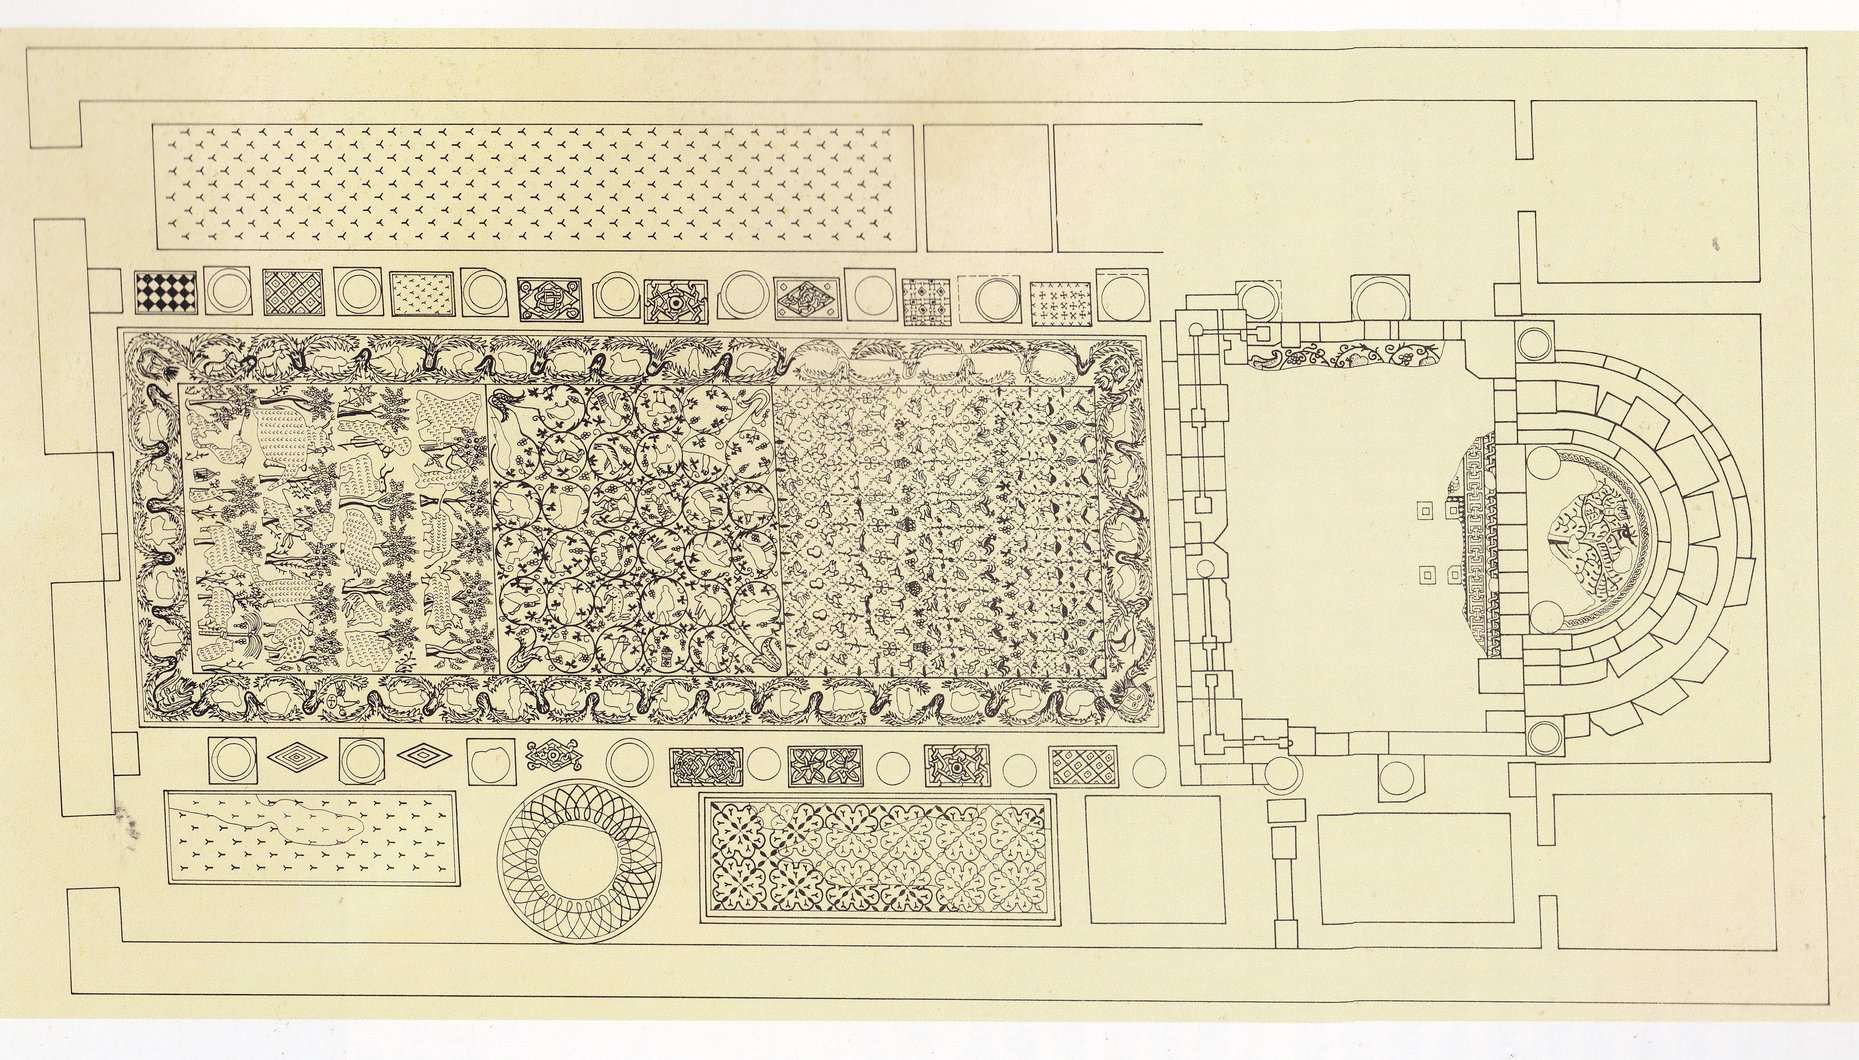 Madaba, Church of al-Khadir; plan by U. Lux and C. Florimont, from The Mosaics of Jordan (1992).